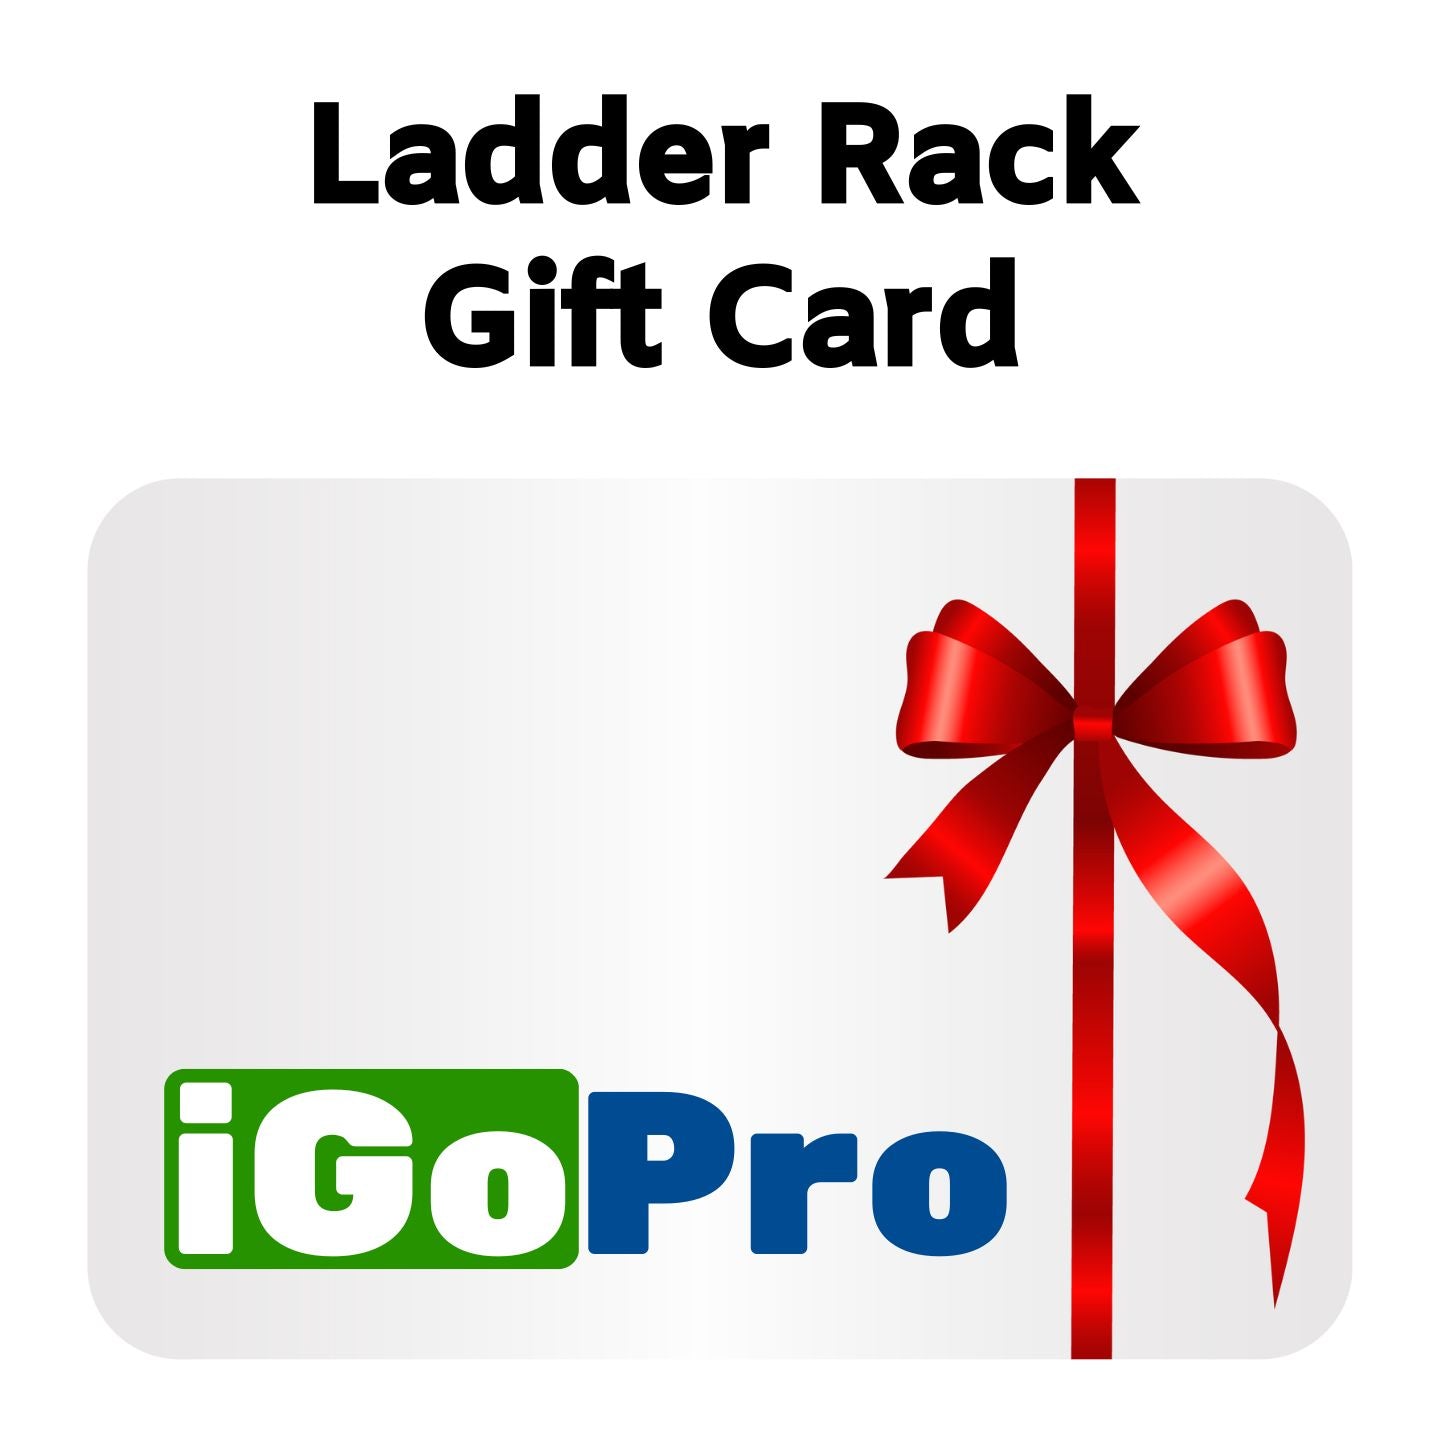 Ladder Rack Gift Card